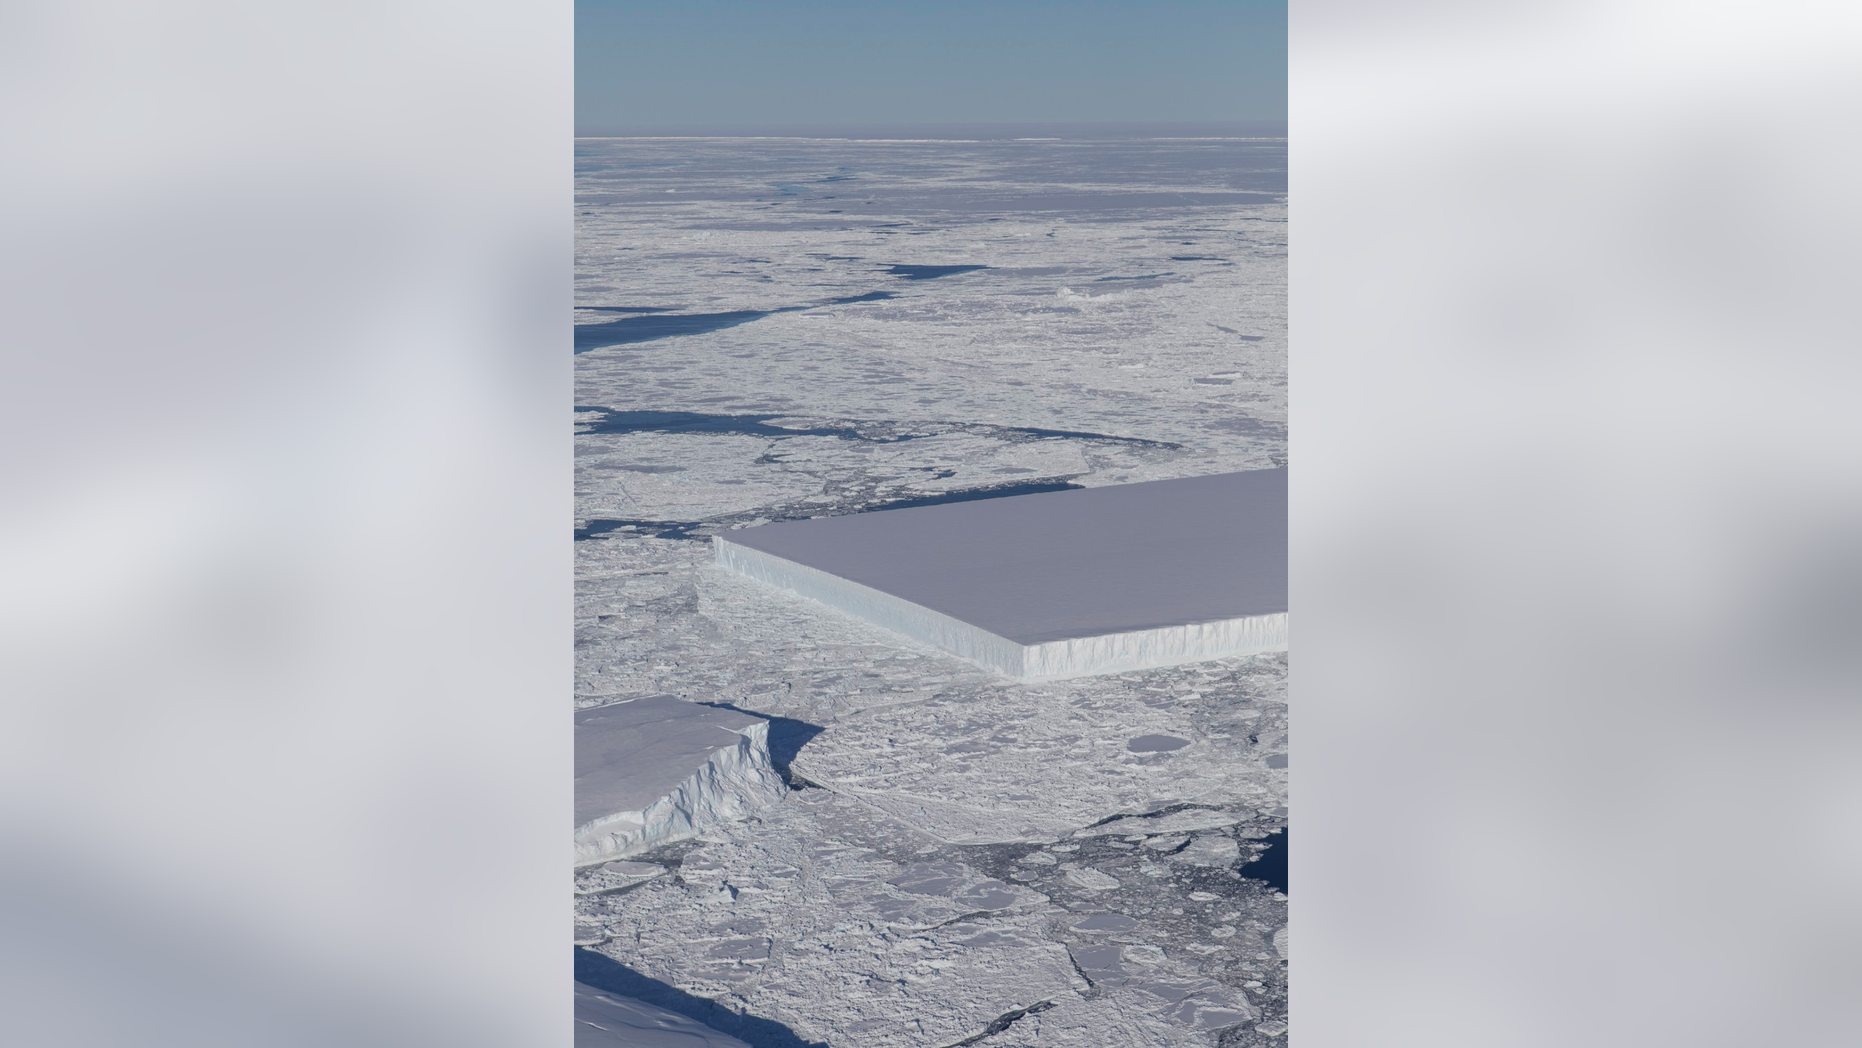 NASA's IceBridge project captured this view of a strange rectangular-shaped iceberg in Antarctica in October 2018.